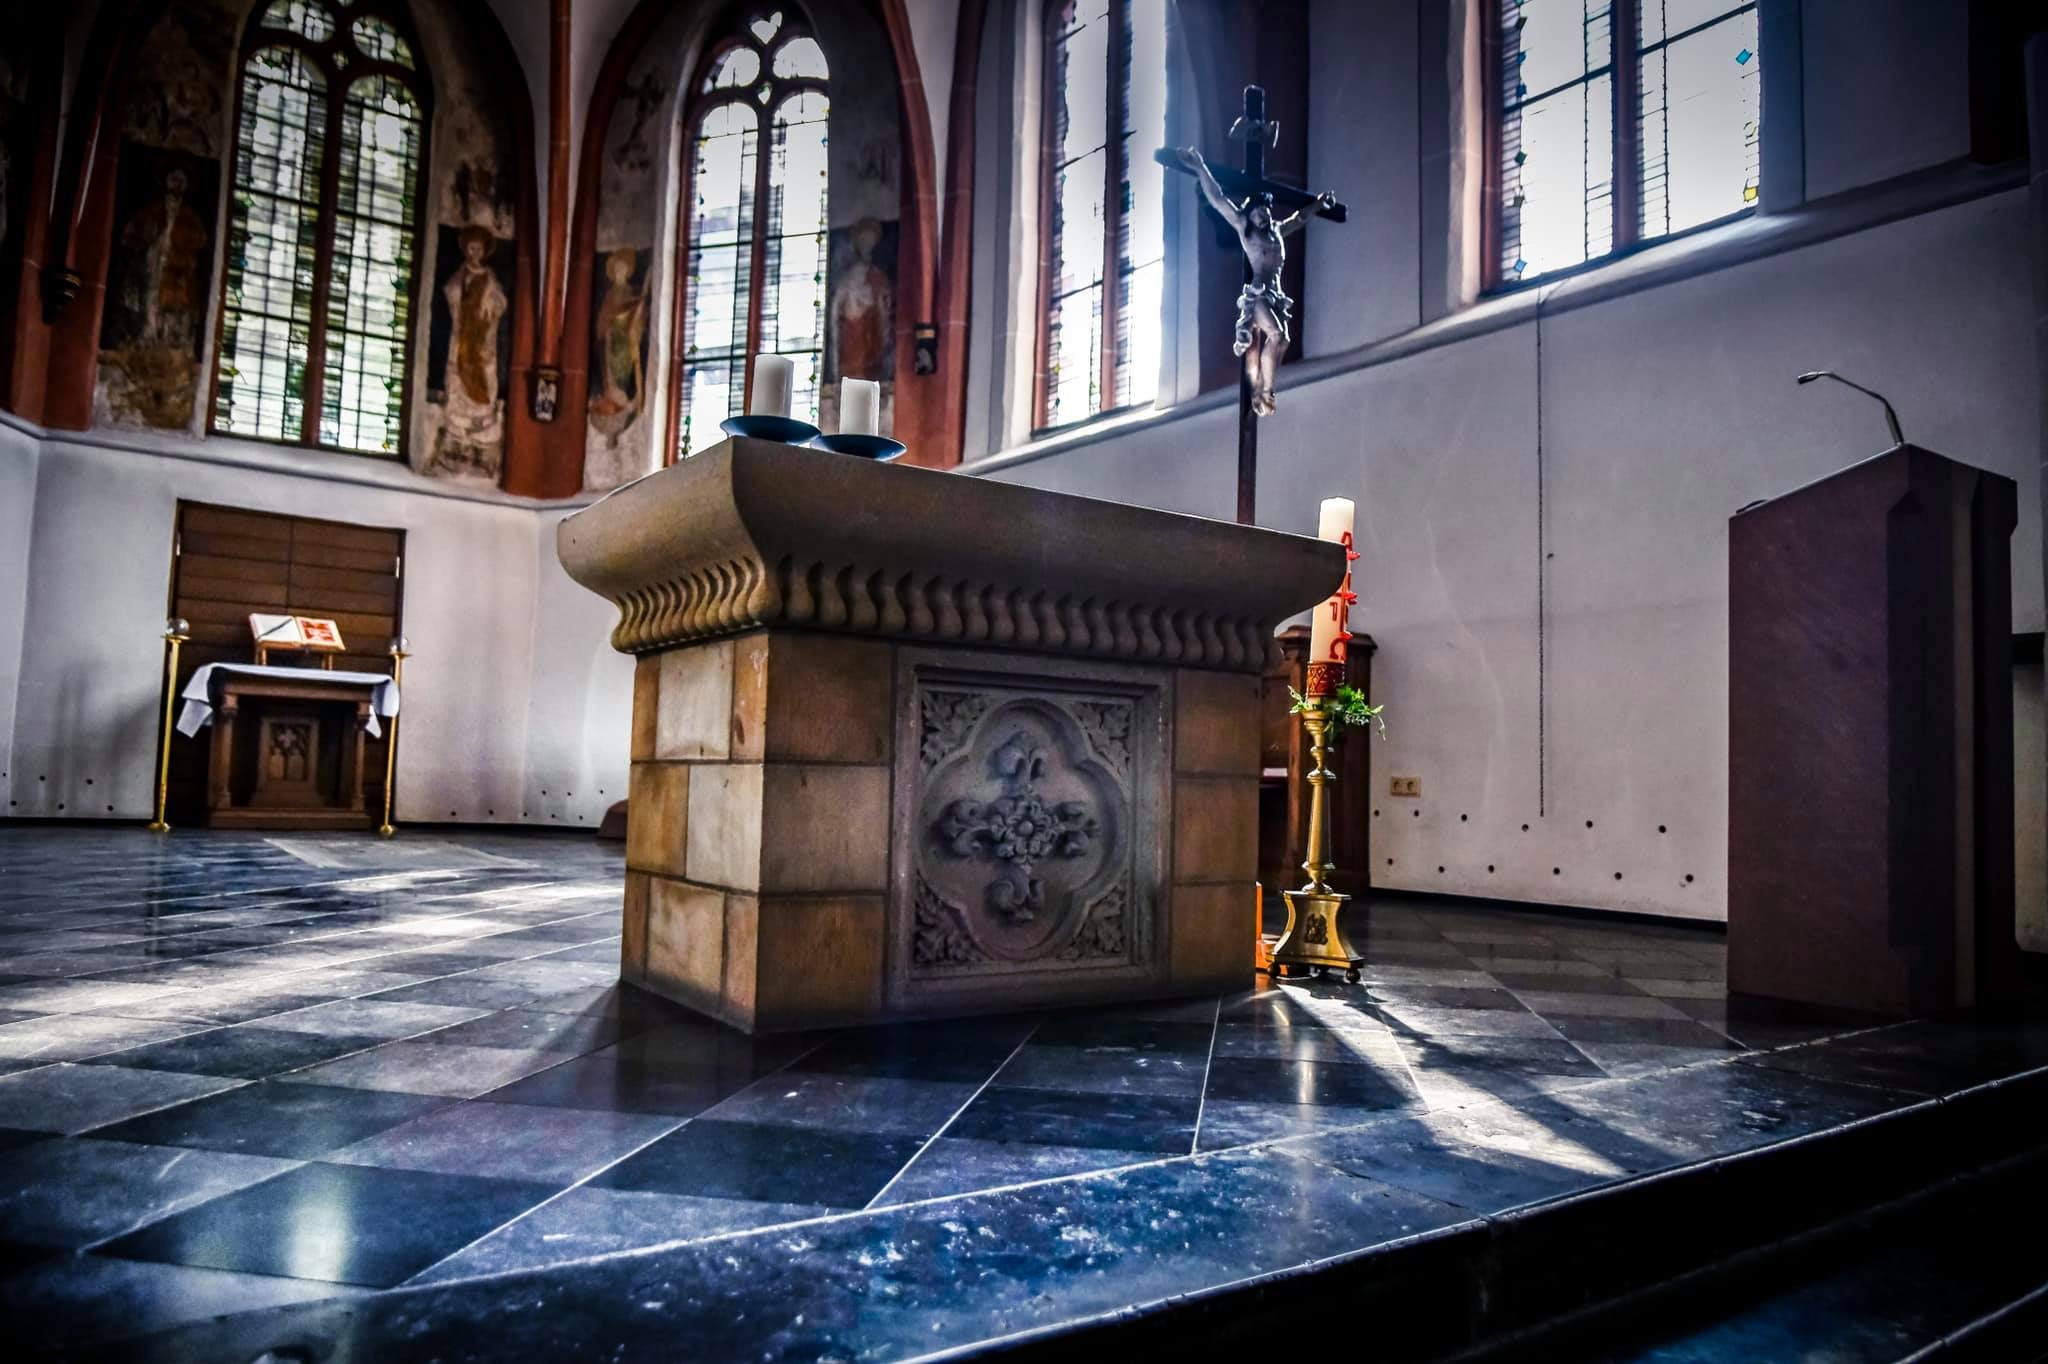 Mustafa Celikel | Kirche St. Ulrich | 2018 (Mustafa Celikel CC BY-NC-SA)